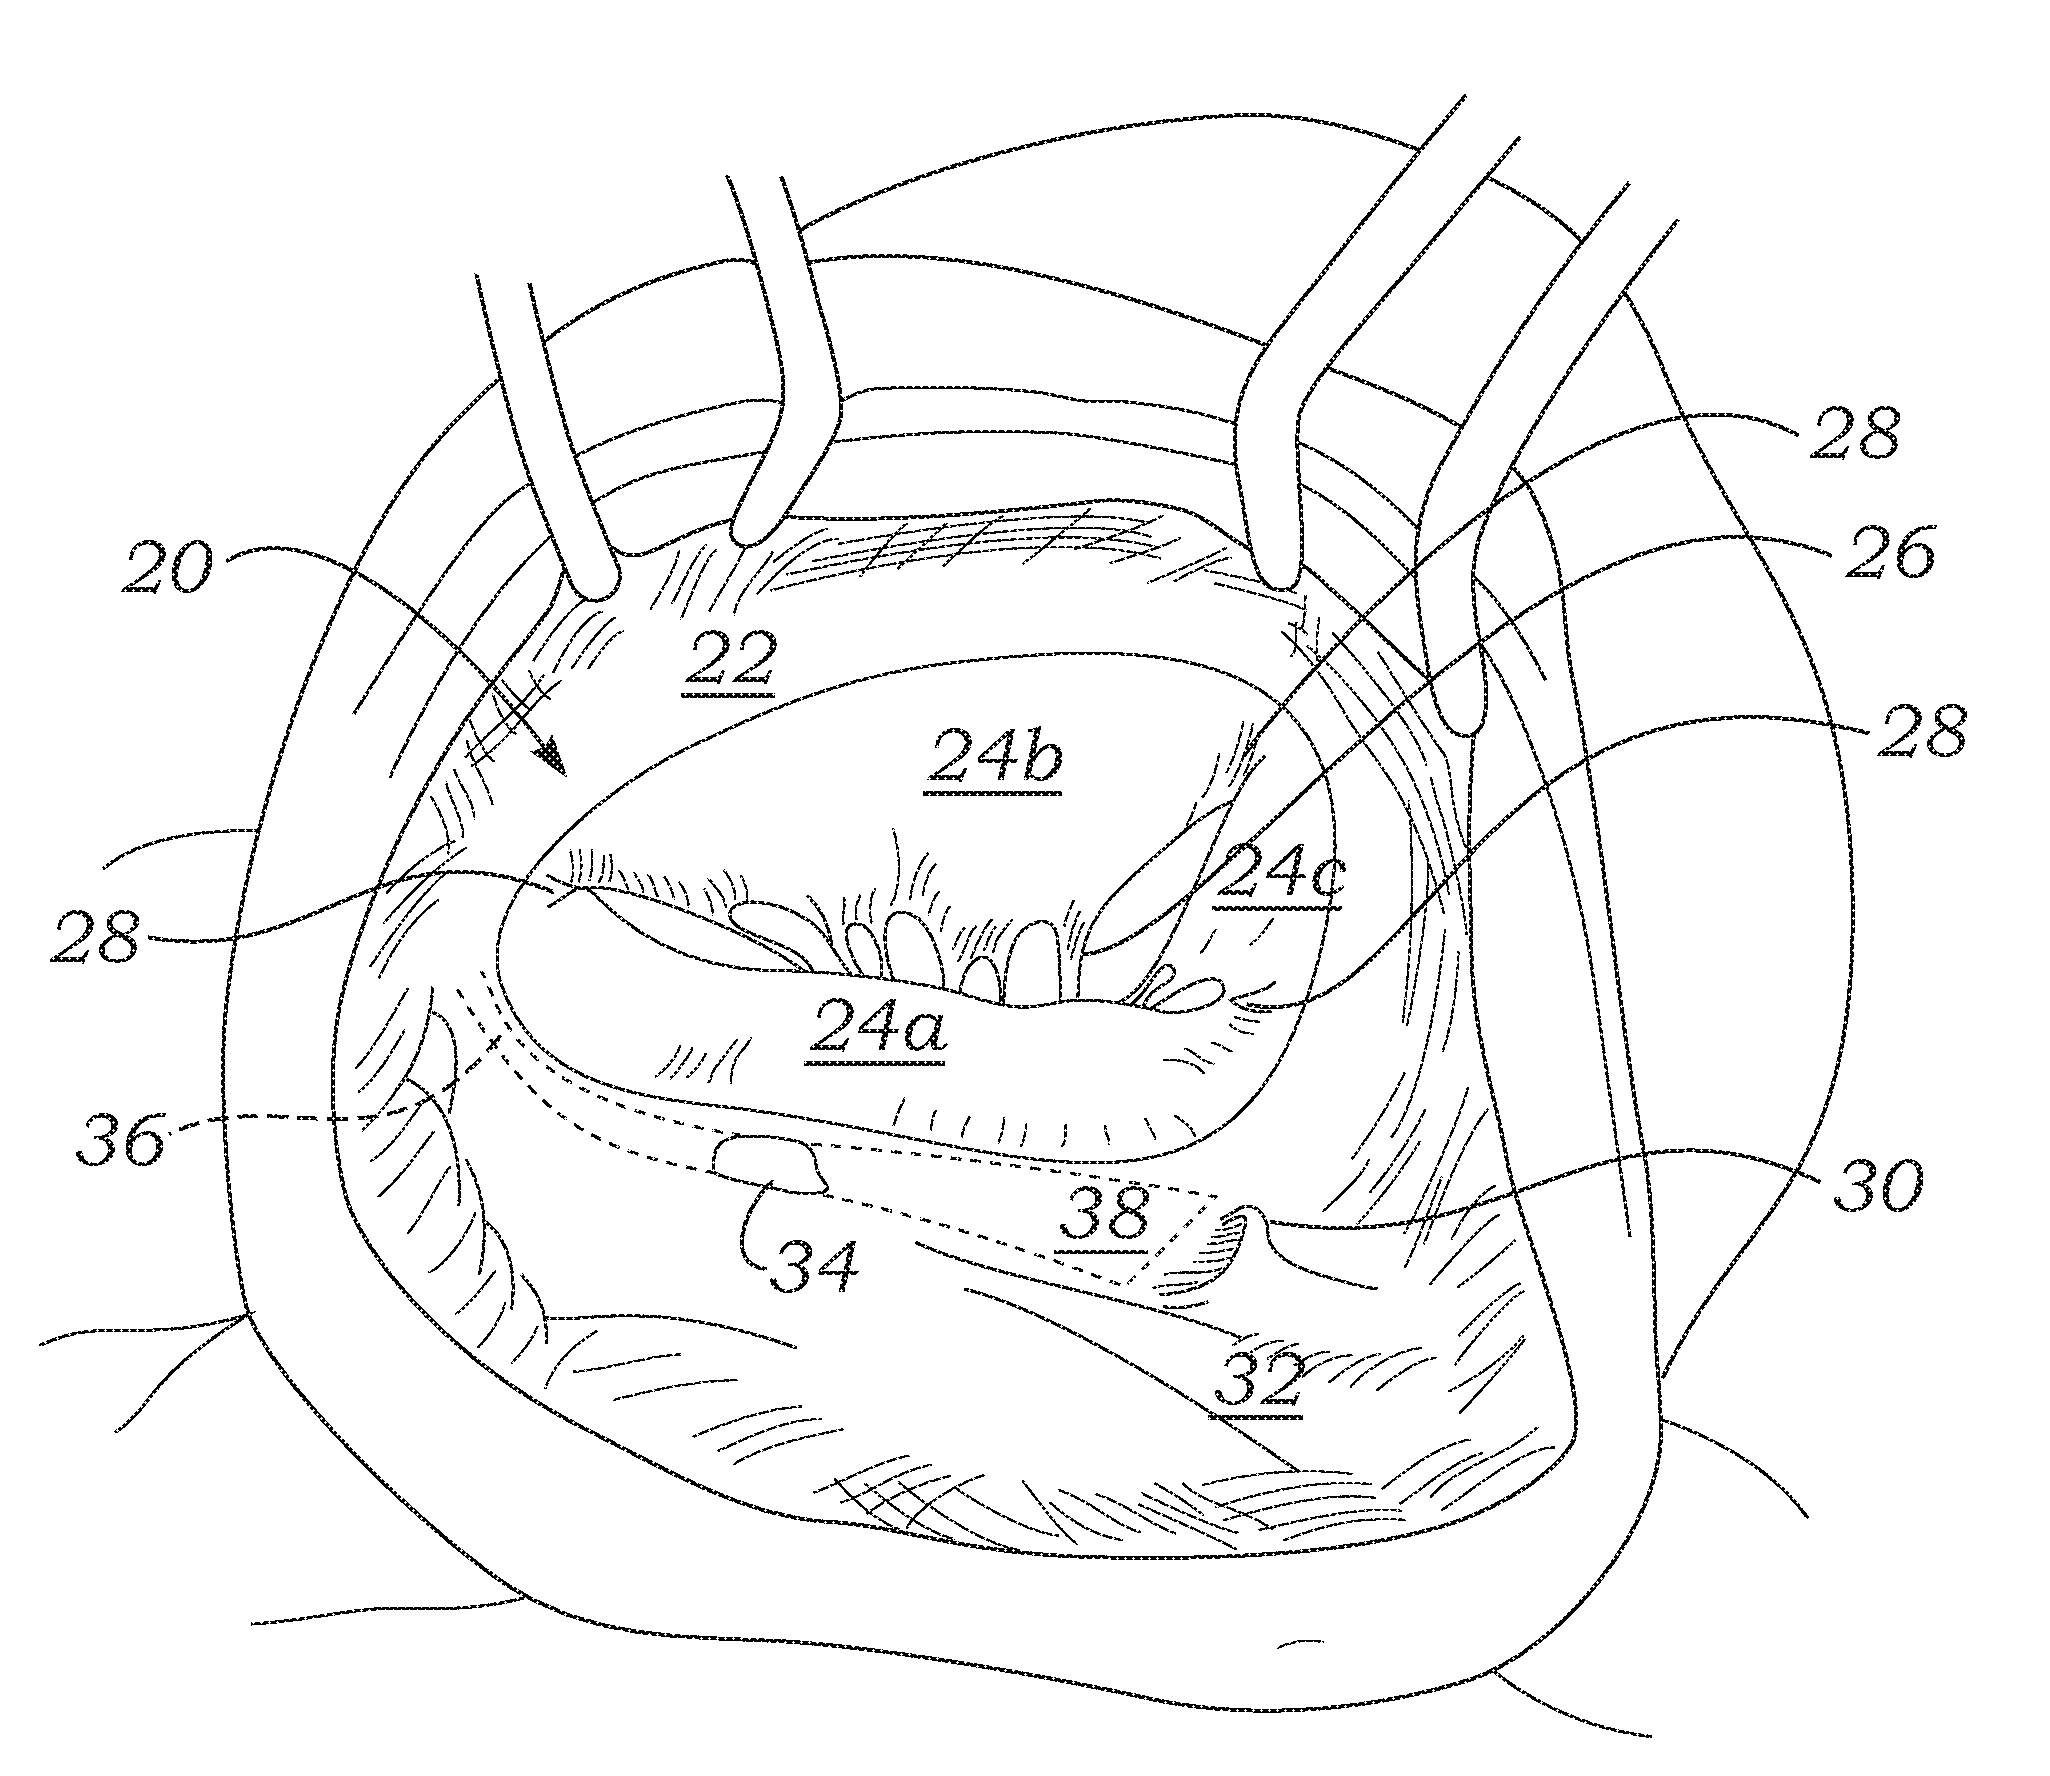 Physiologic tricuspid annuloplasty ring